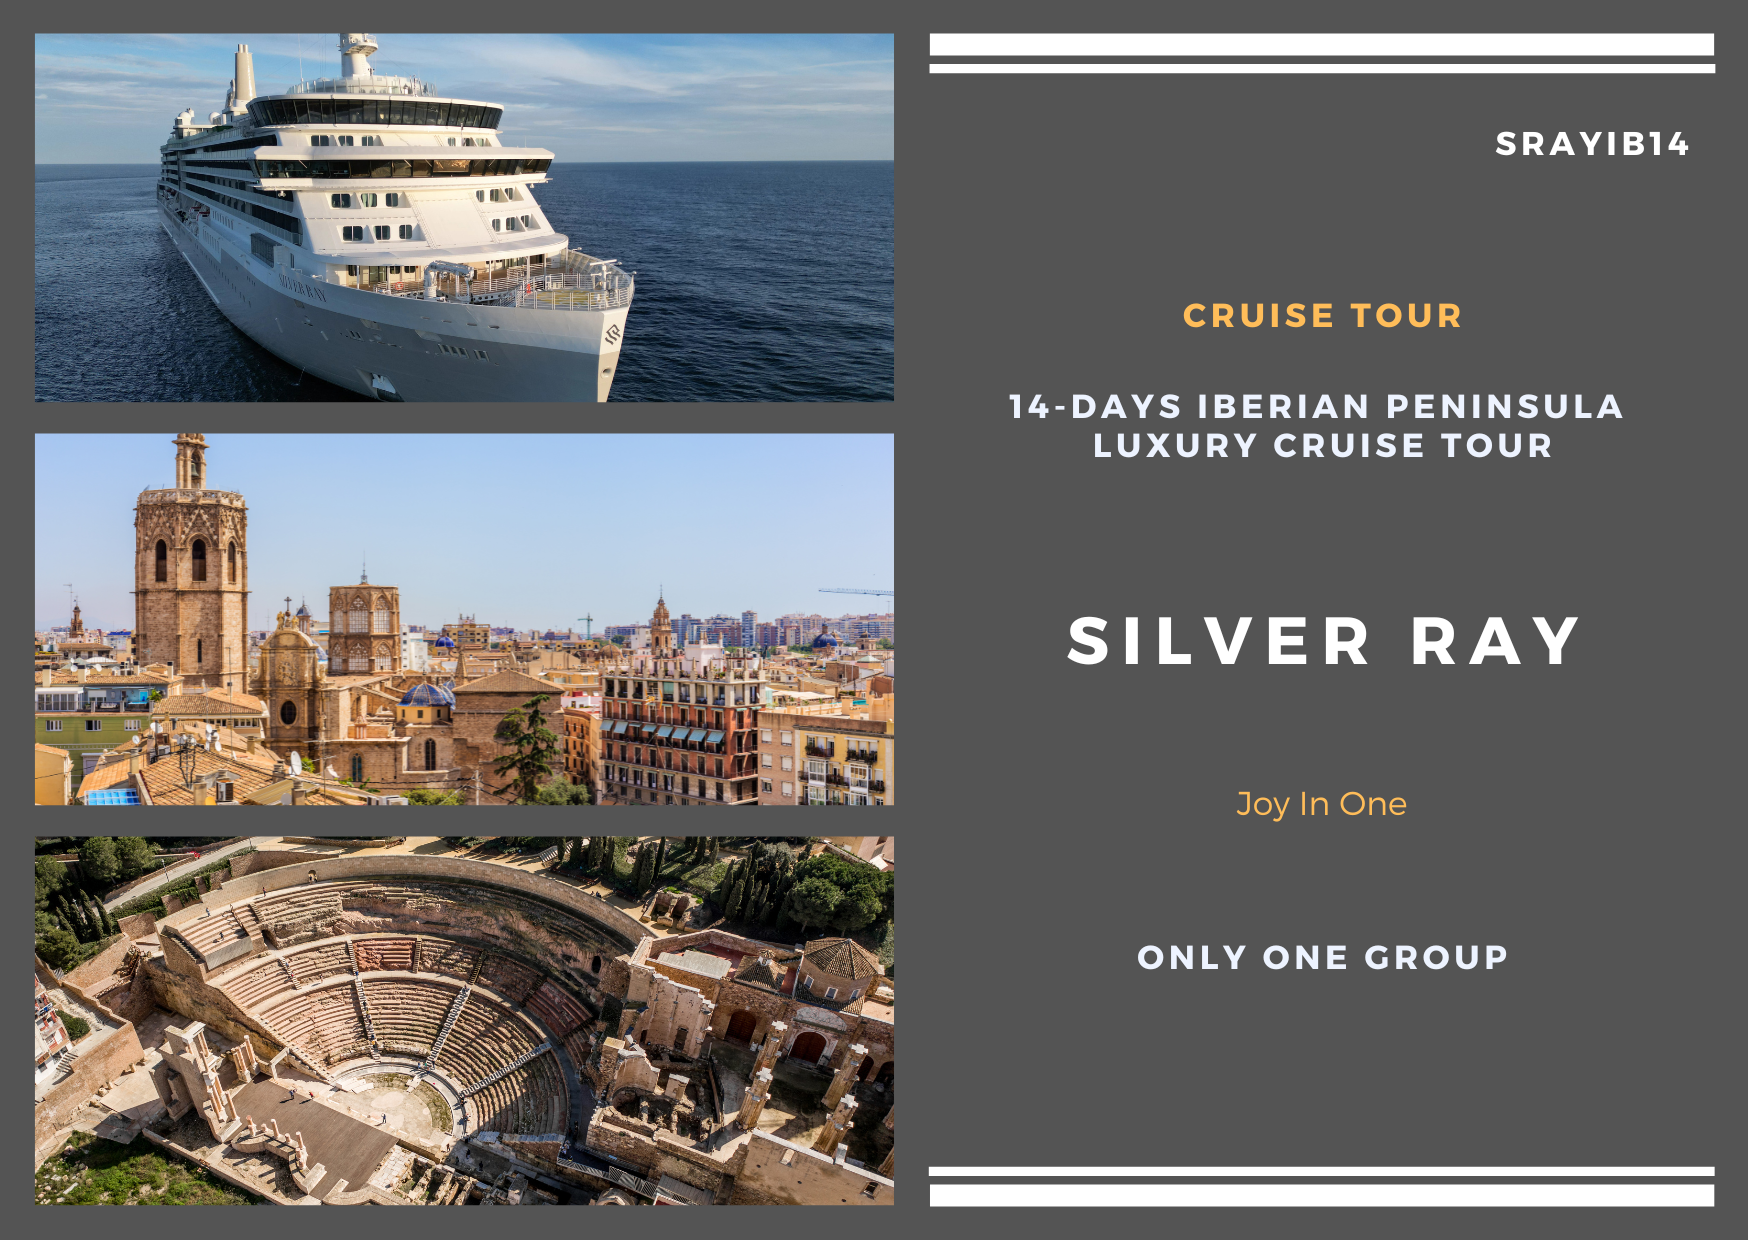 14-days Iberian Peninsula Silver Ray Luxury Cruise Tour (SRAYIB14)